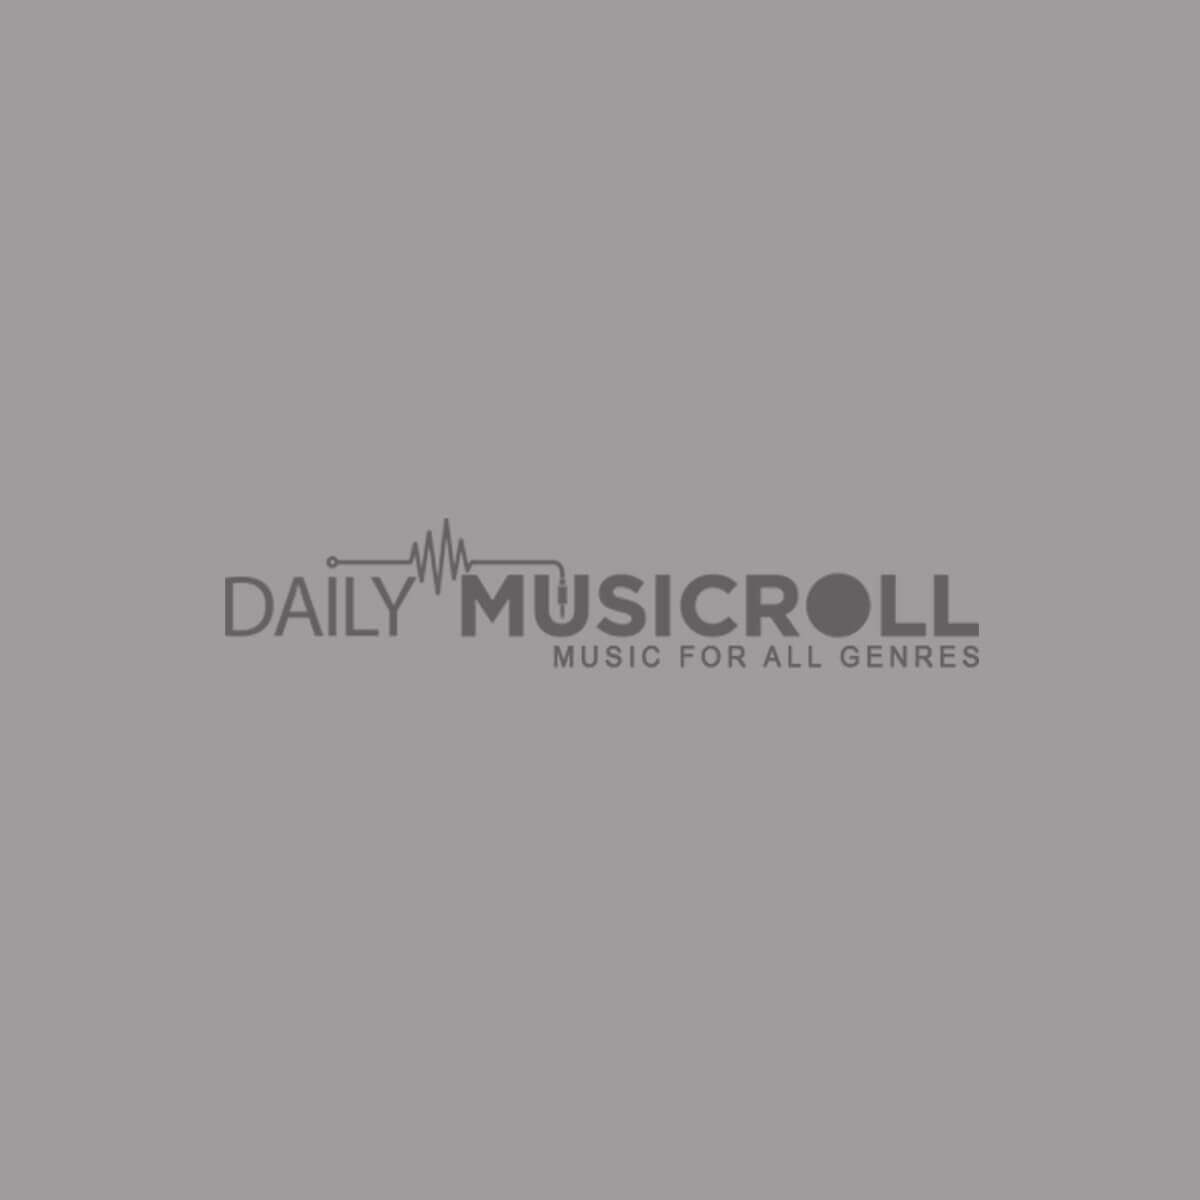 Vincere Sylph “Children of Pain” Official Single Release